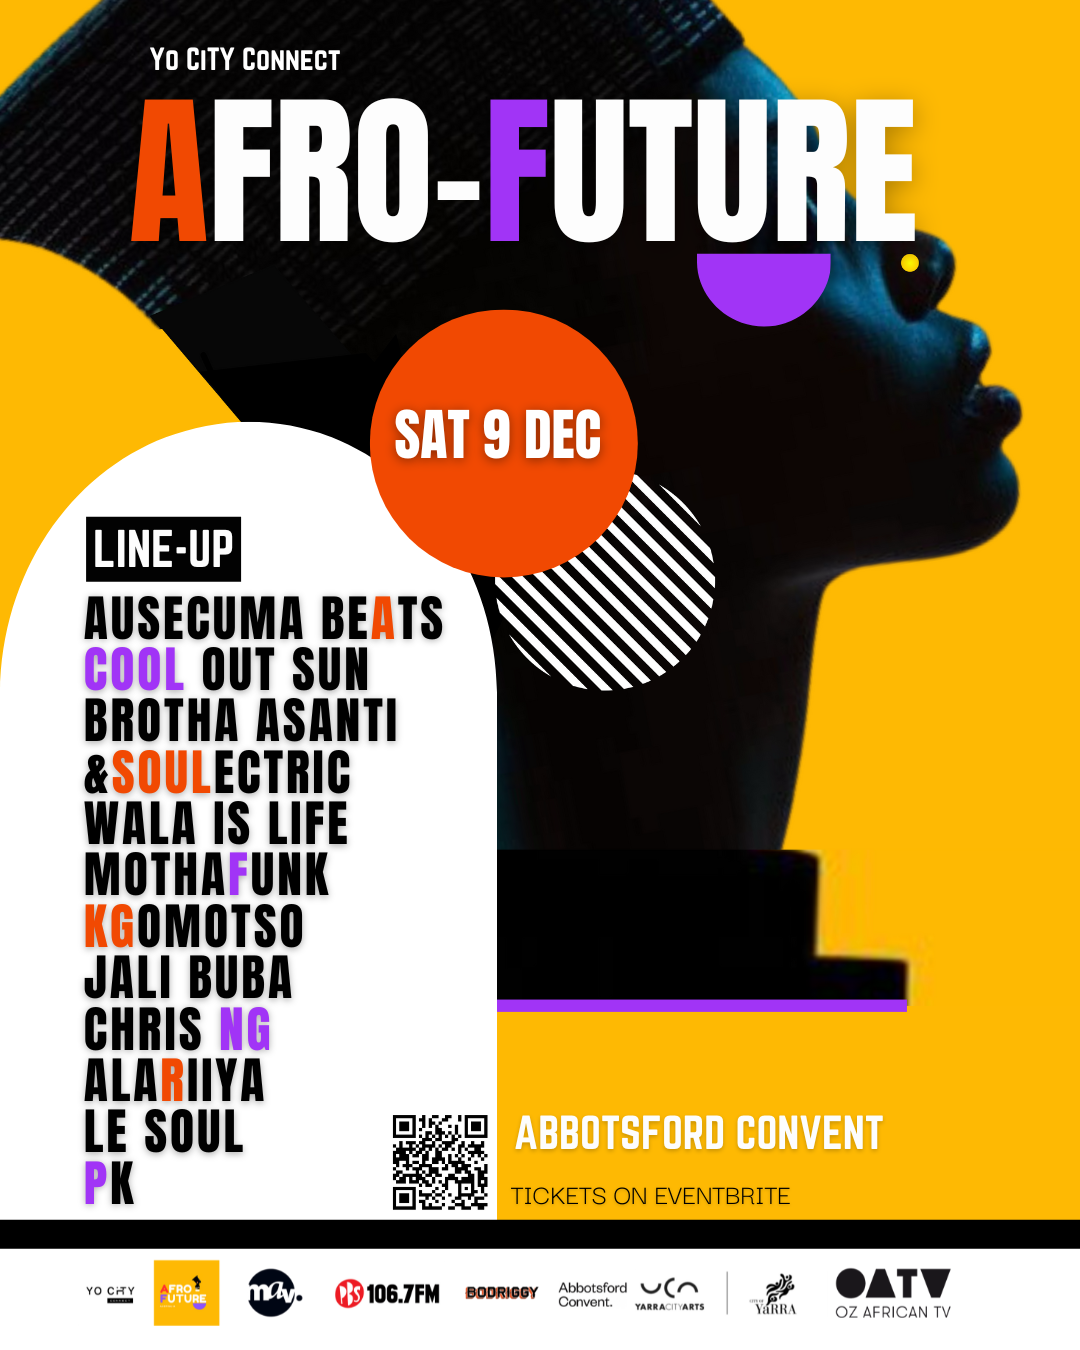 Le Soul & Chris NG at Afro-Future Sat Dec 9 @ Abbotsford Convent